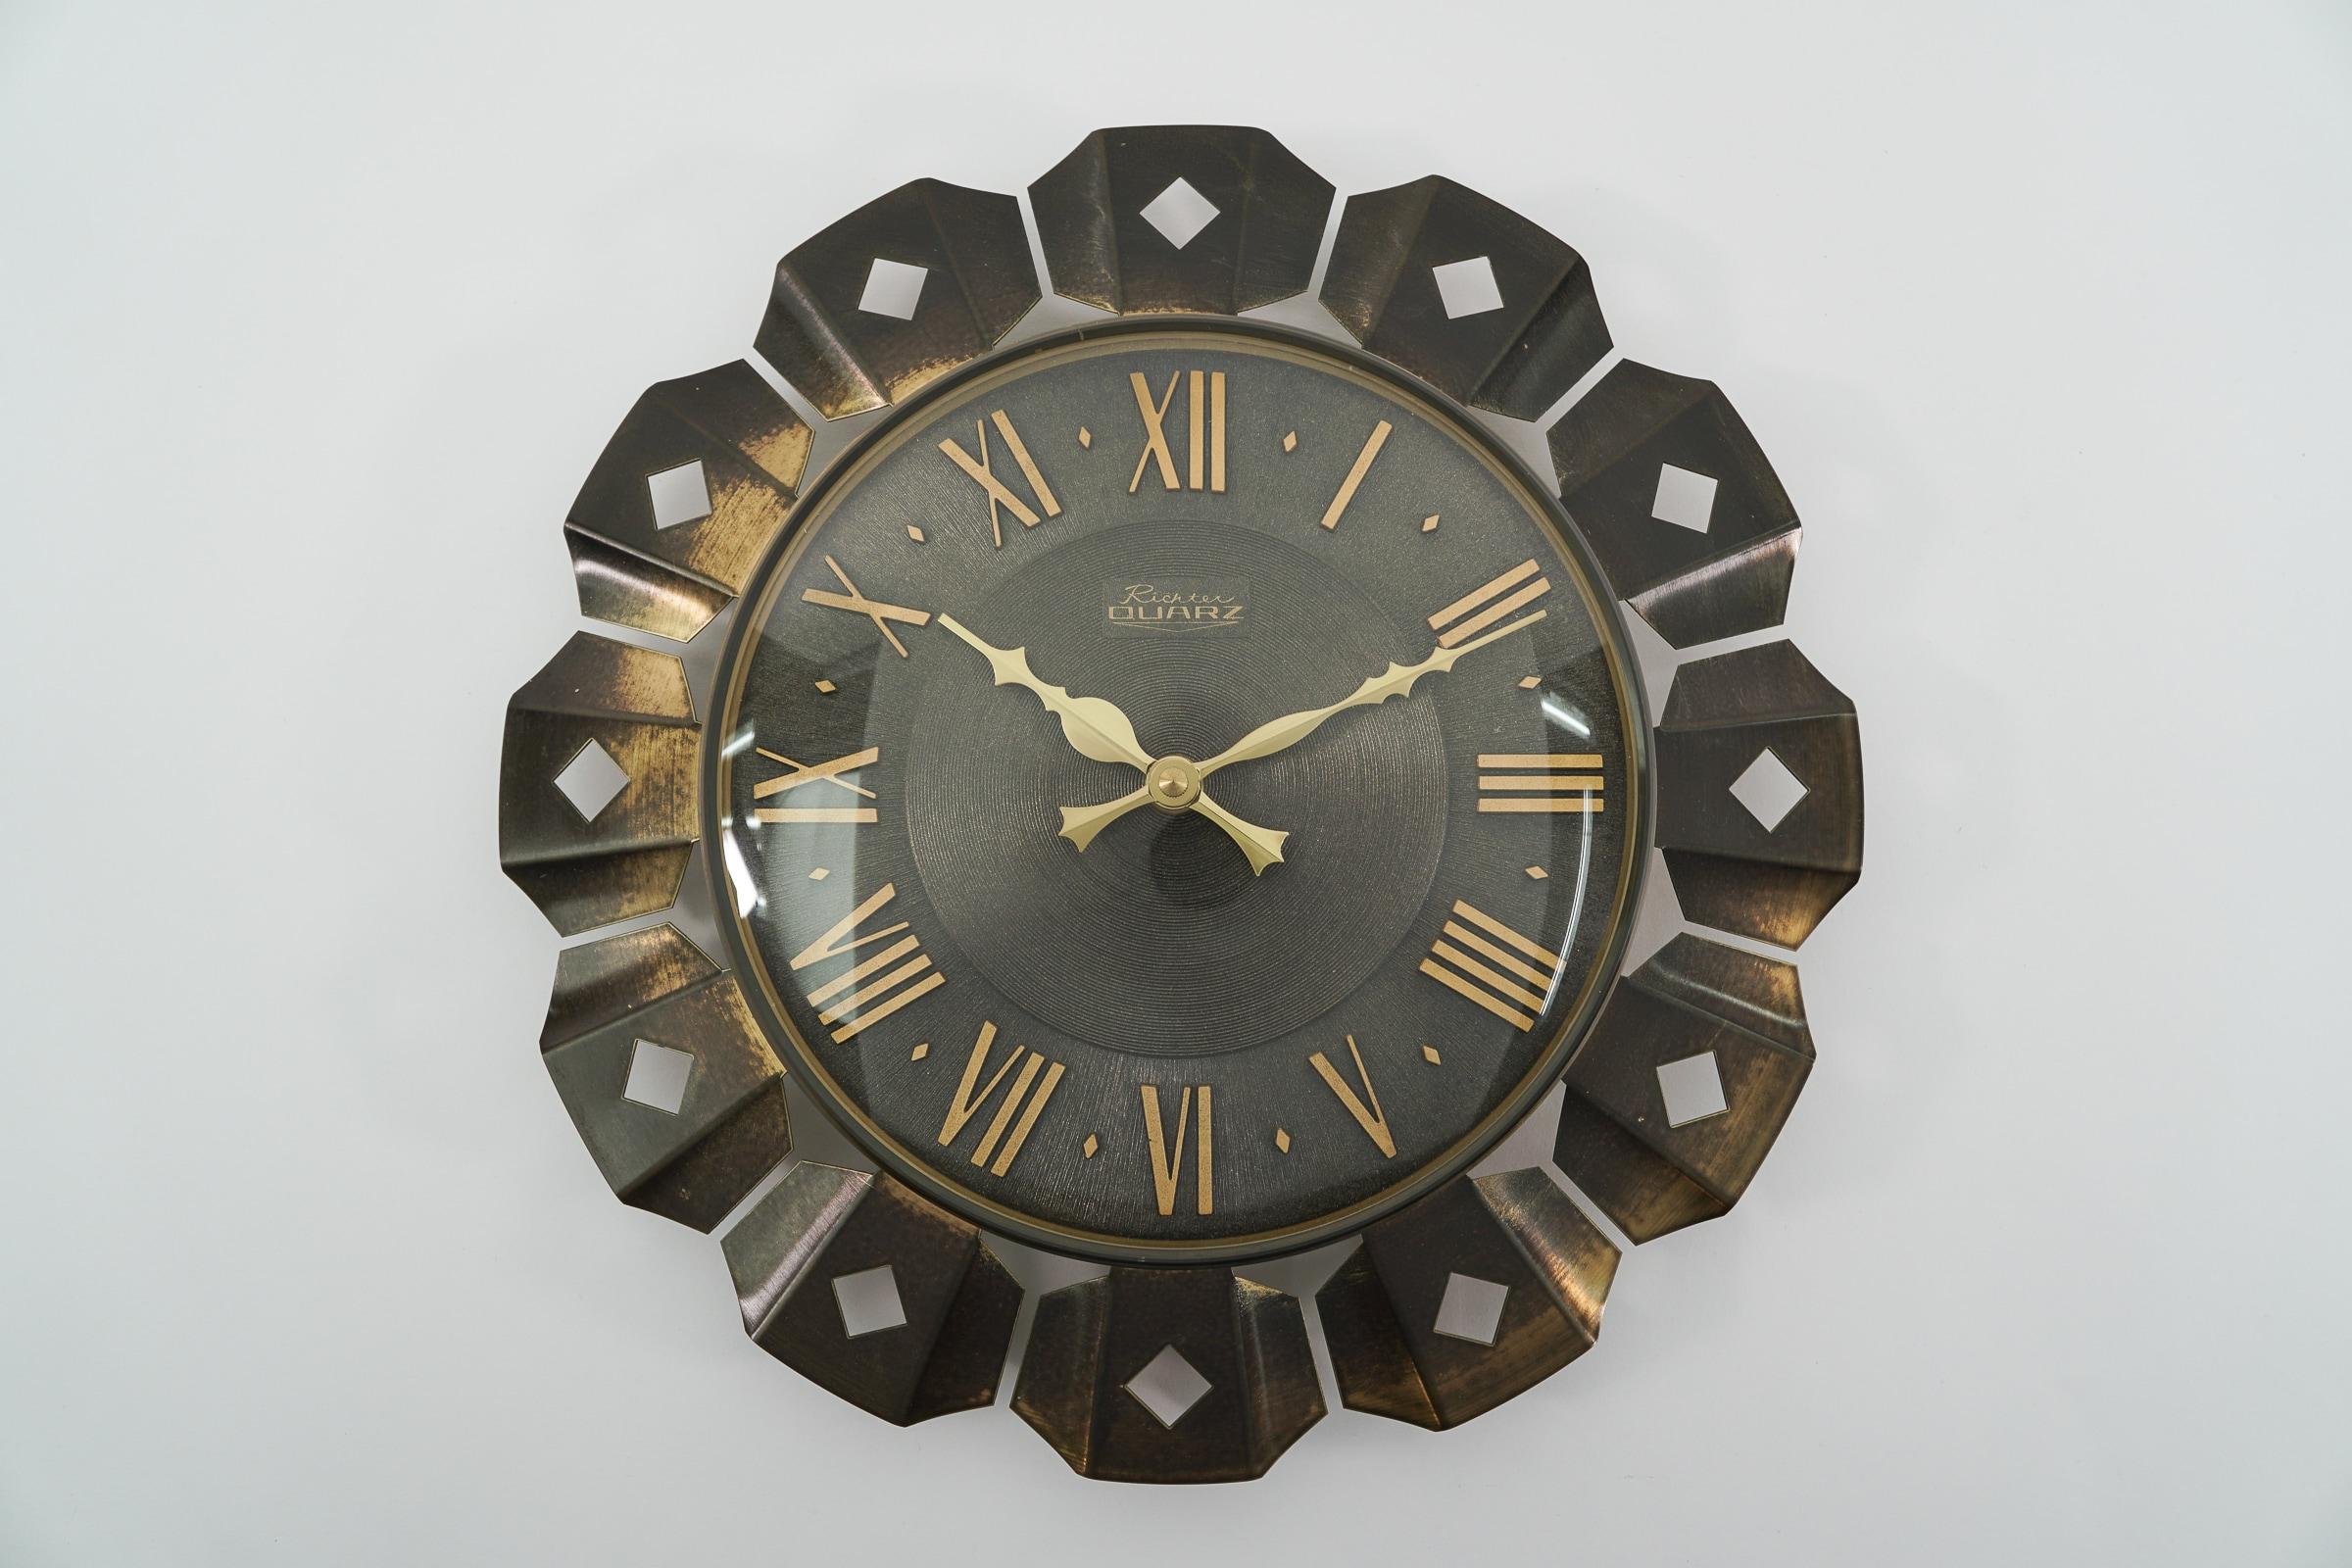 Mid-Century Modern Sunburst Wall Clock by Richter Quarz in Brass, 1960s Germany For Sale 2